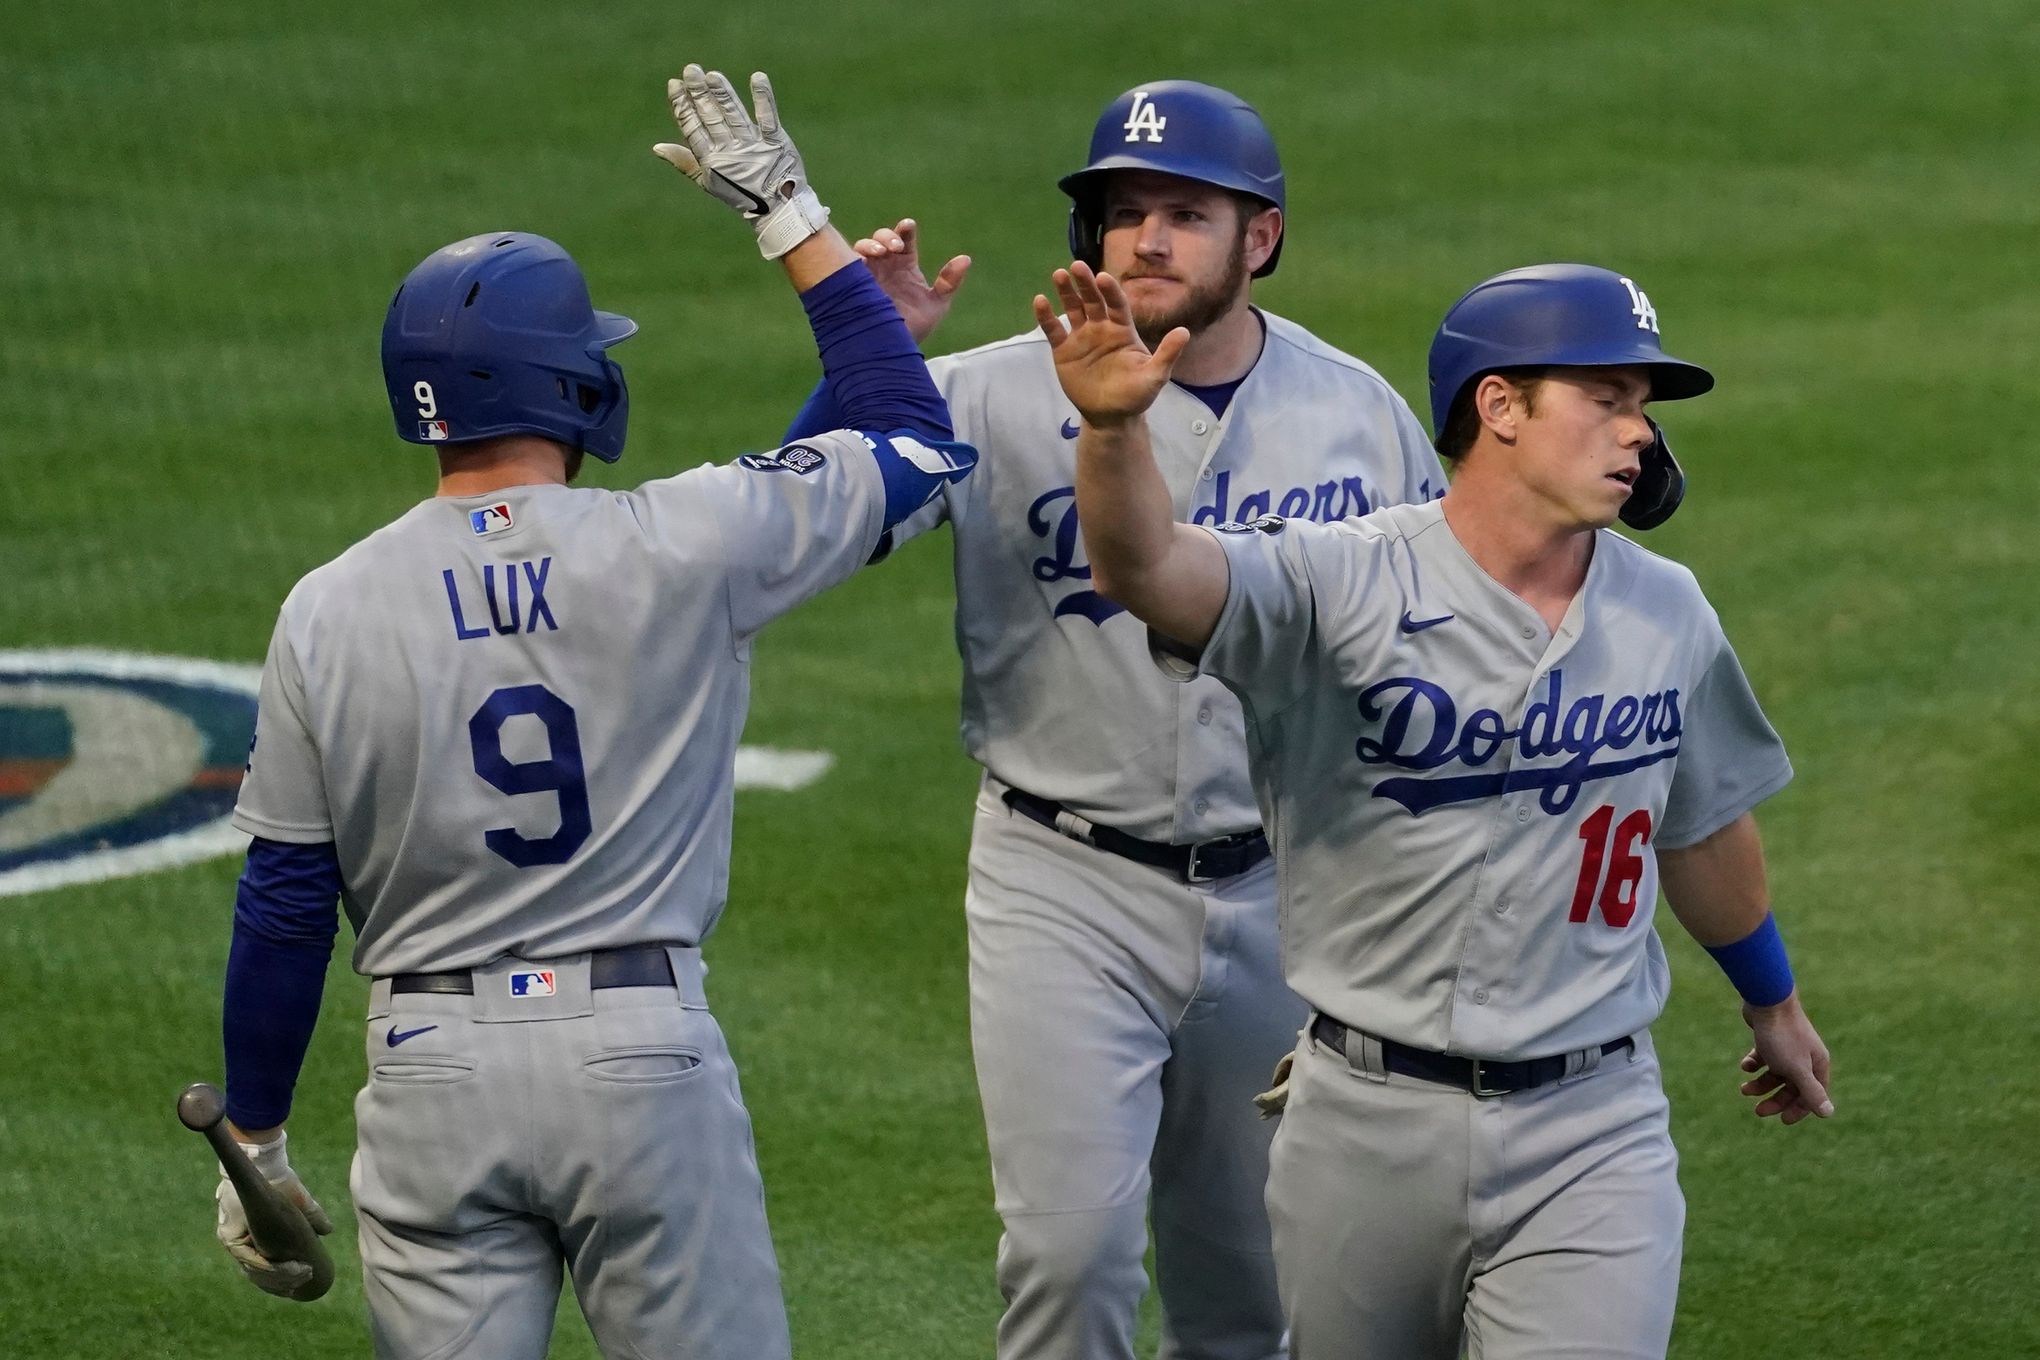 Dodgers 2019 Player Reviews: A.J. Pollock